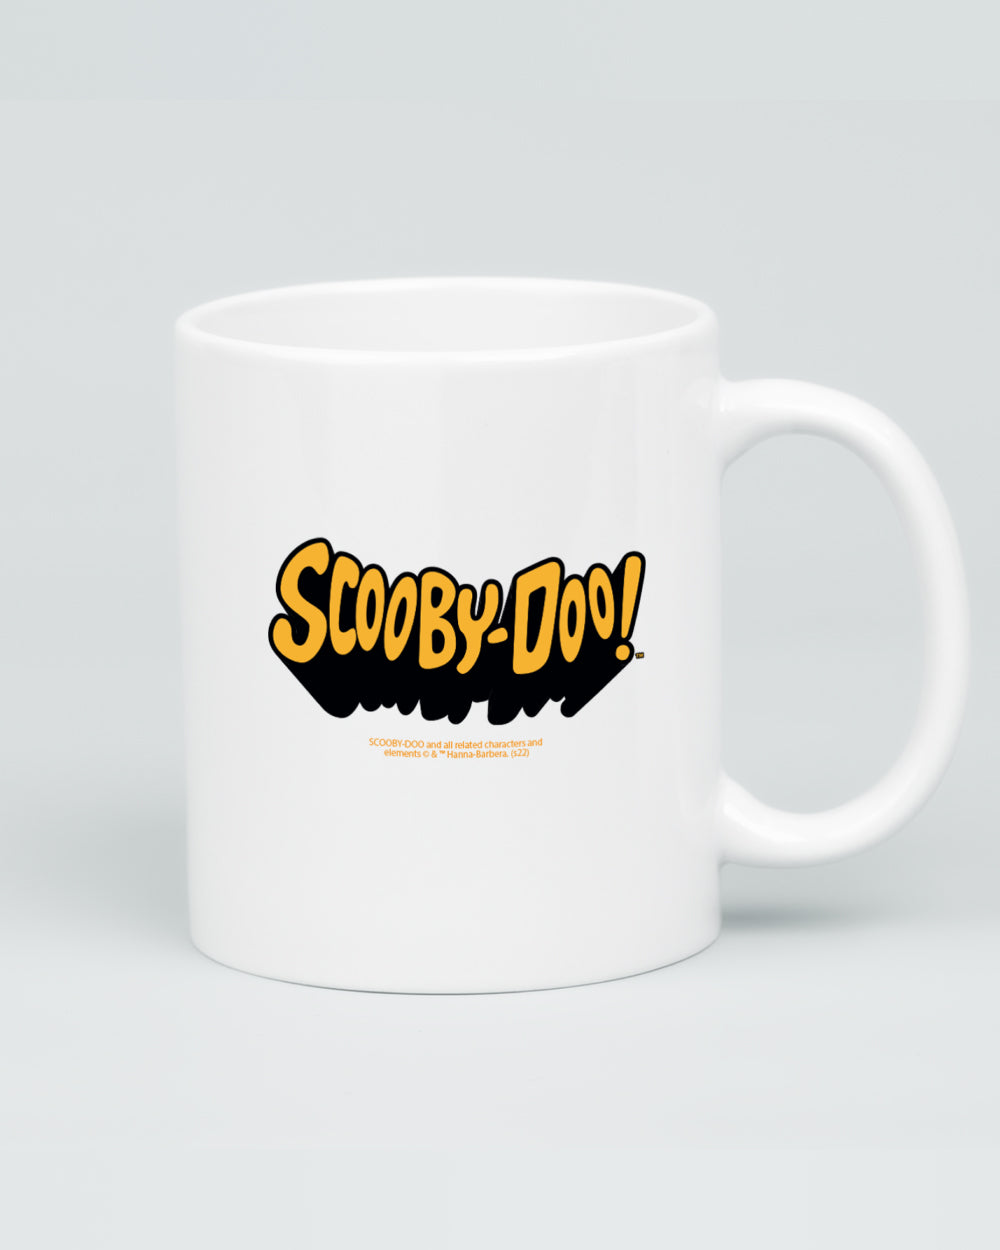 Scooby-Doo Munchies Mug | Threadheads